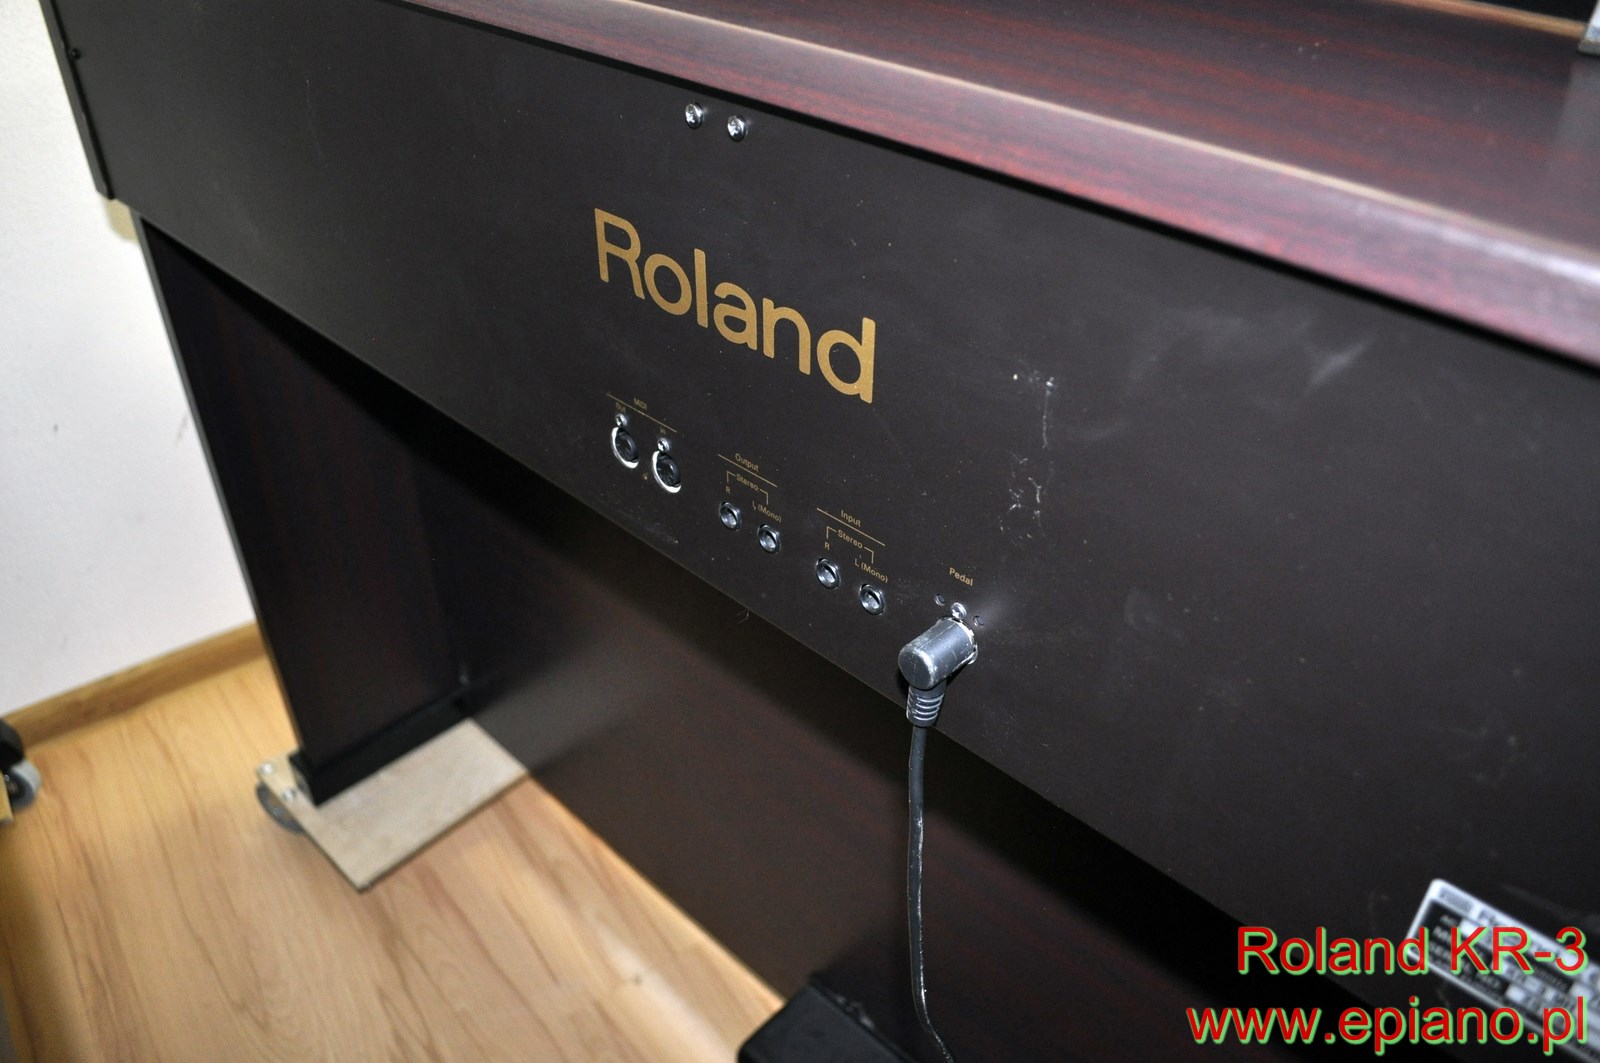 Pianino Roland KR-3